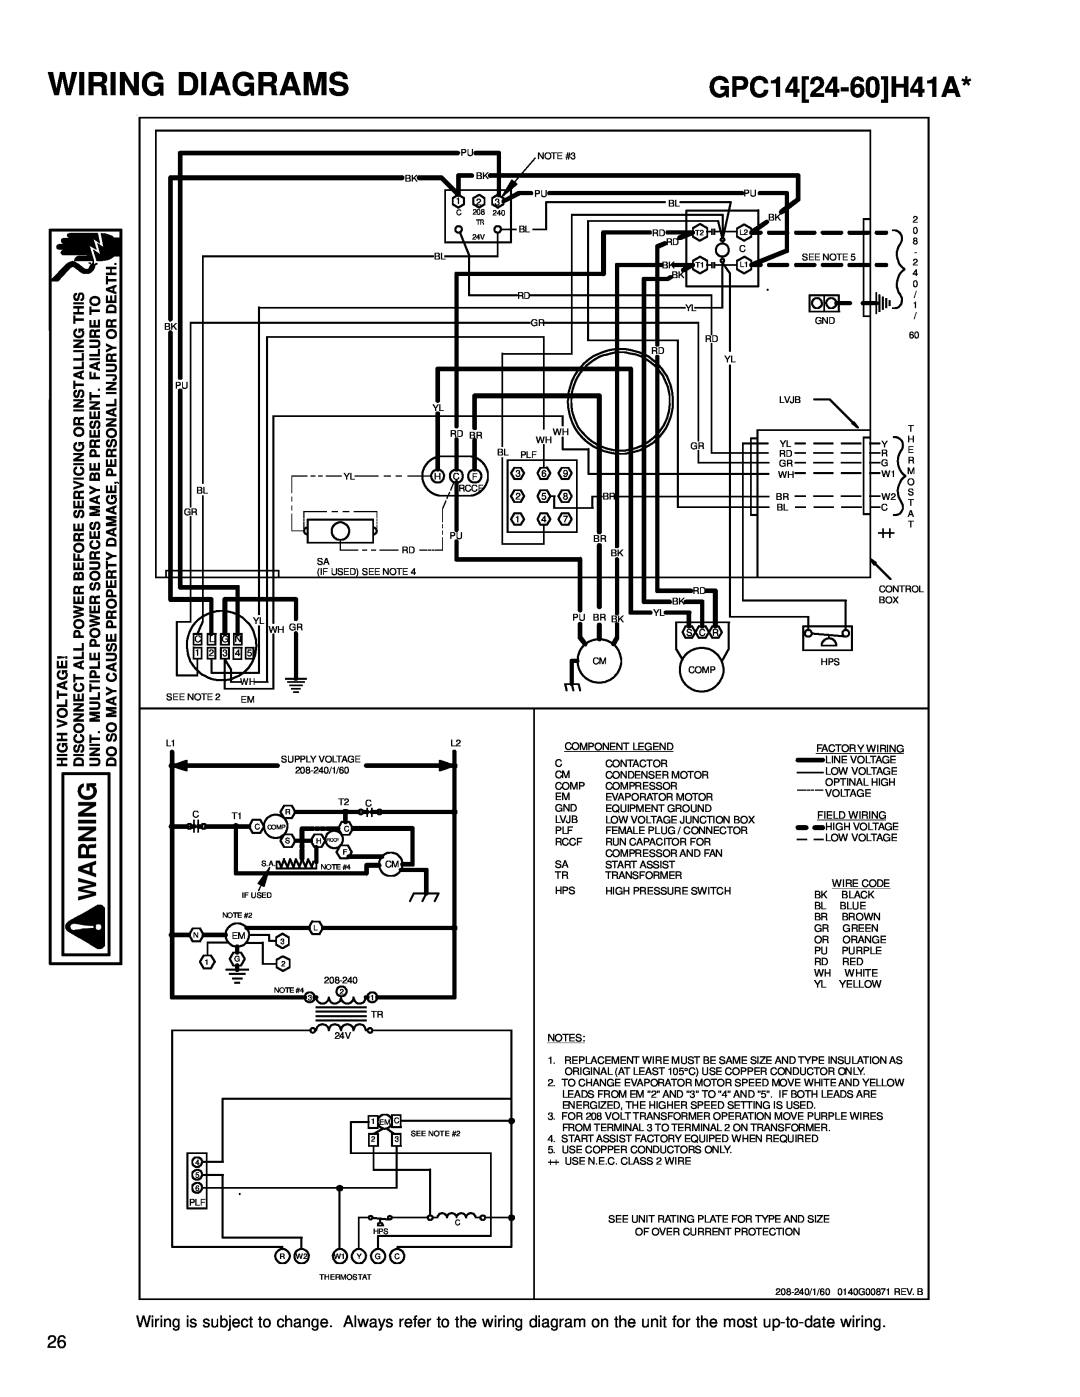 Goodman Mfg R-410A service manual Wiring Diagrams, GPC1424-60H41A, High Warning Unit. Do 